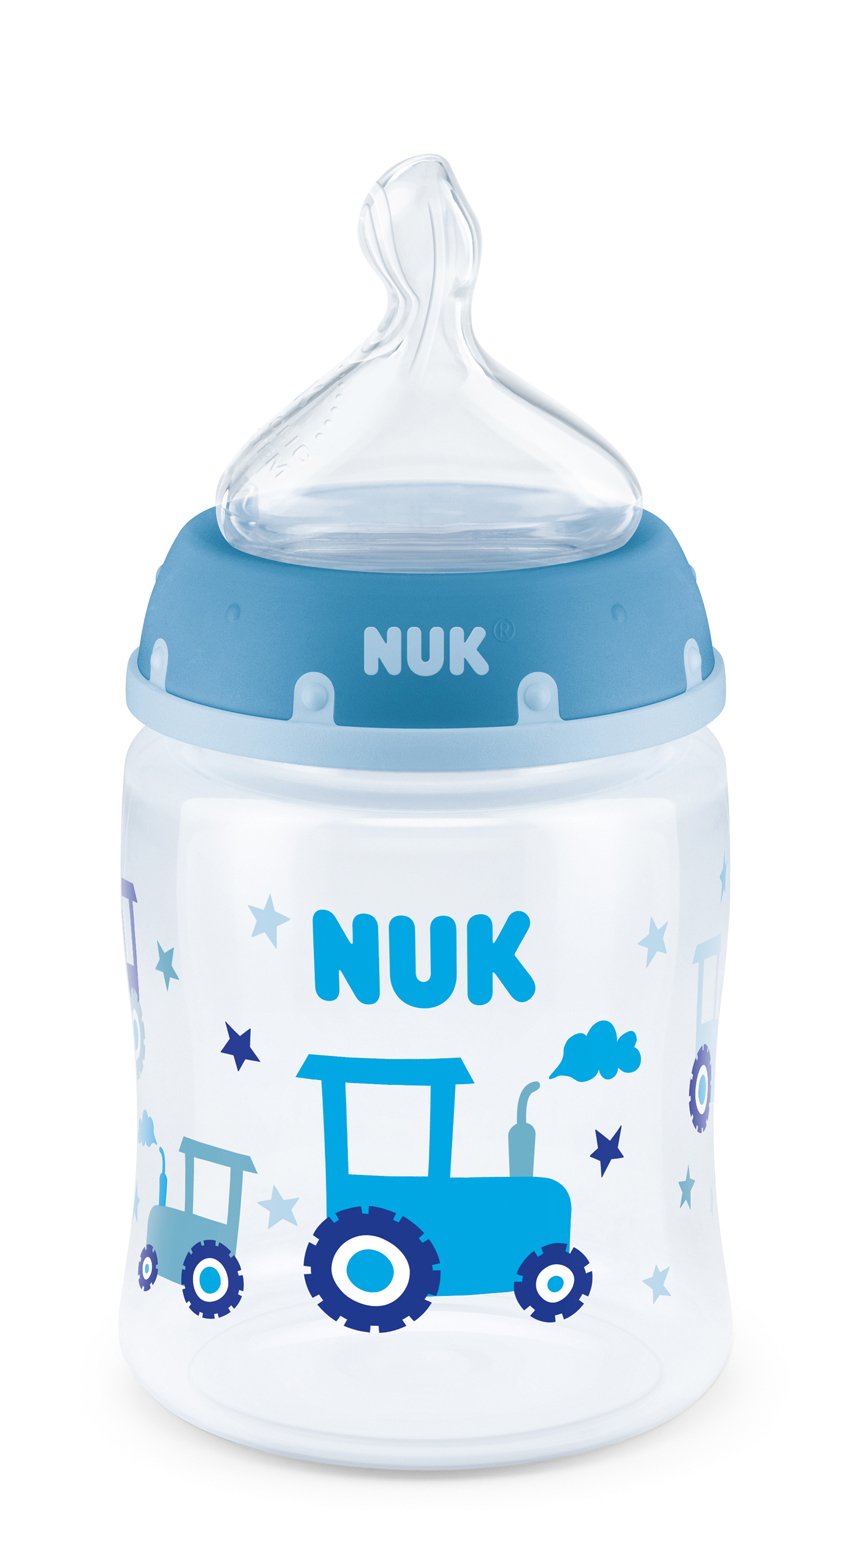 NUK® Smooth Flow™ Anti-Colic Bottle 5oz